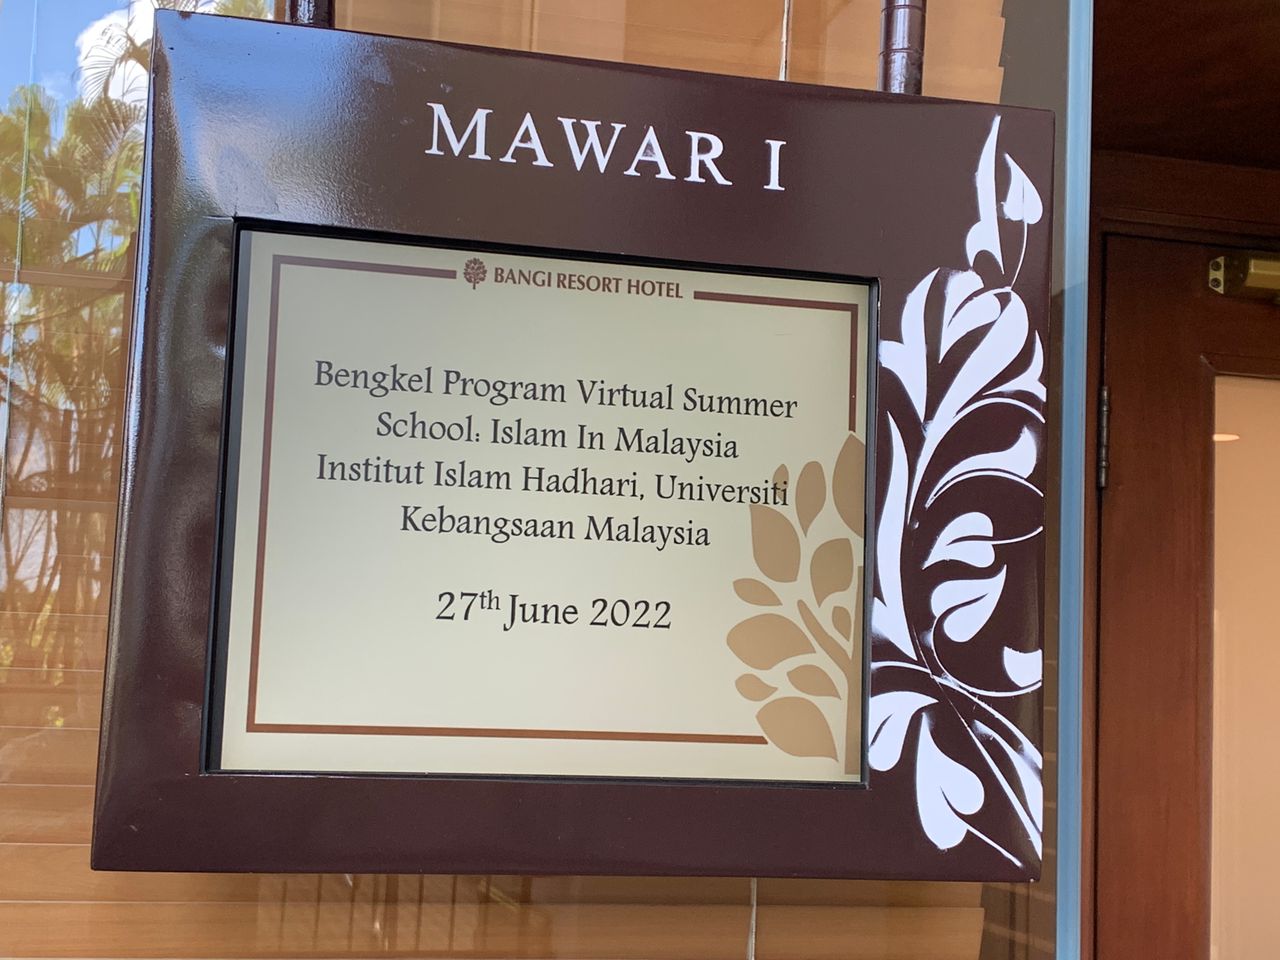 Bengkel Program Virtual Summer School: Islam In Malaysia 27062022 pic01